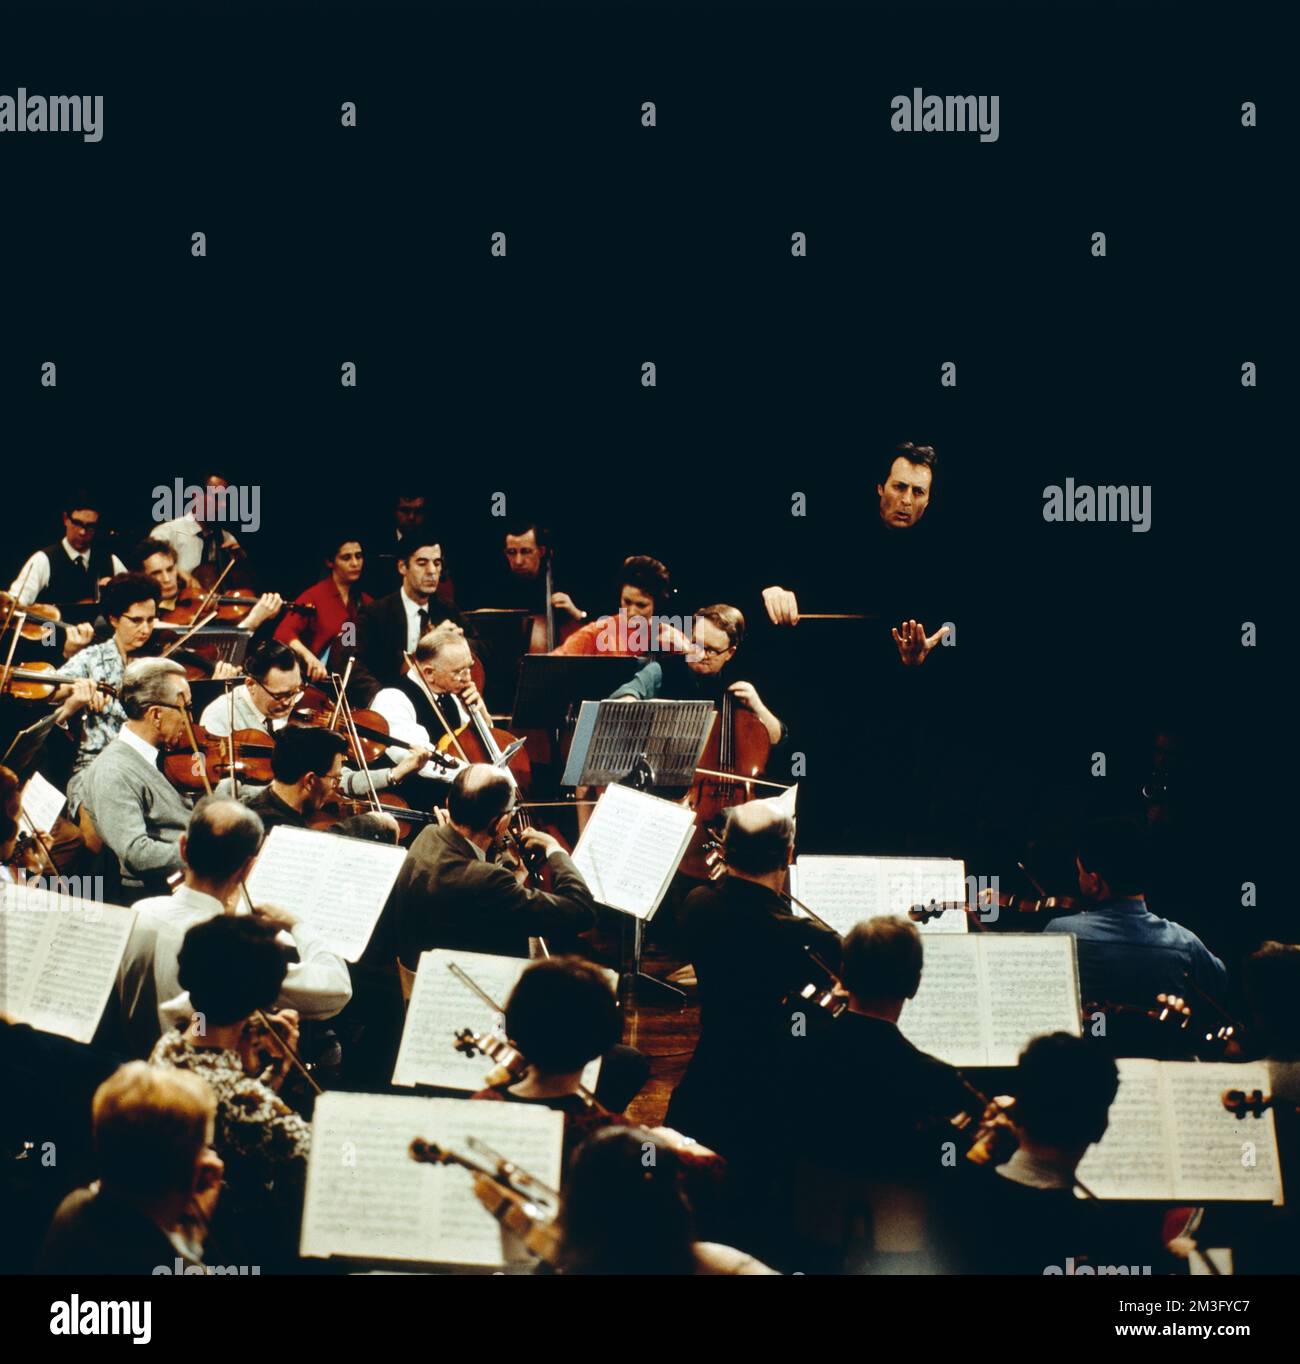 Carlo Maria Giulini, italienischer Dirigent, Chefdirigent der Wiener Symphoniker, hier bei einer Orchesterprobe, 1975. Carlo Maria Giulini, Italian conductor, Chief Conductor of the Vienna Symphony Orchestra, here at an orchestra rehearsal, 1975. Stock Photo